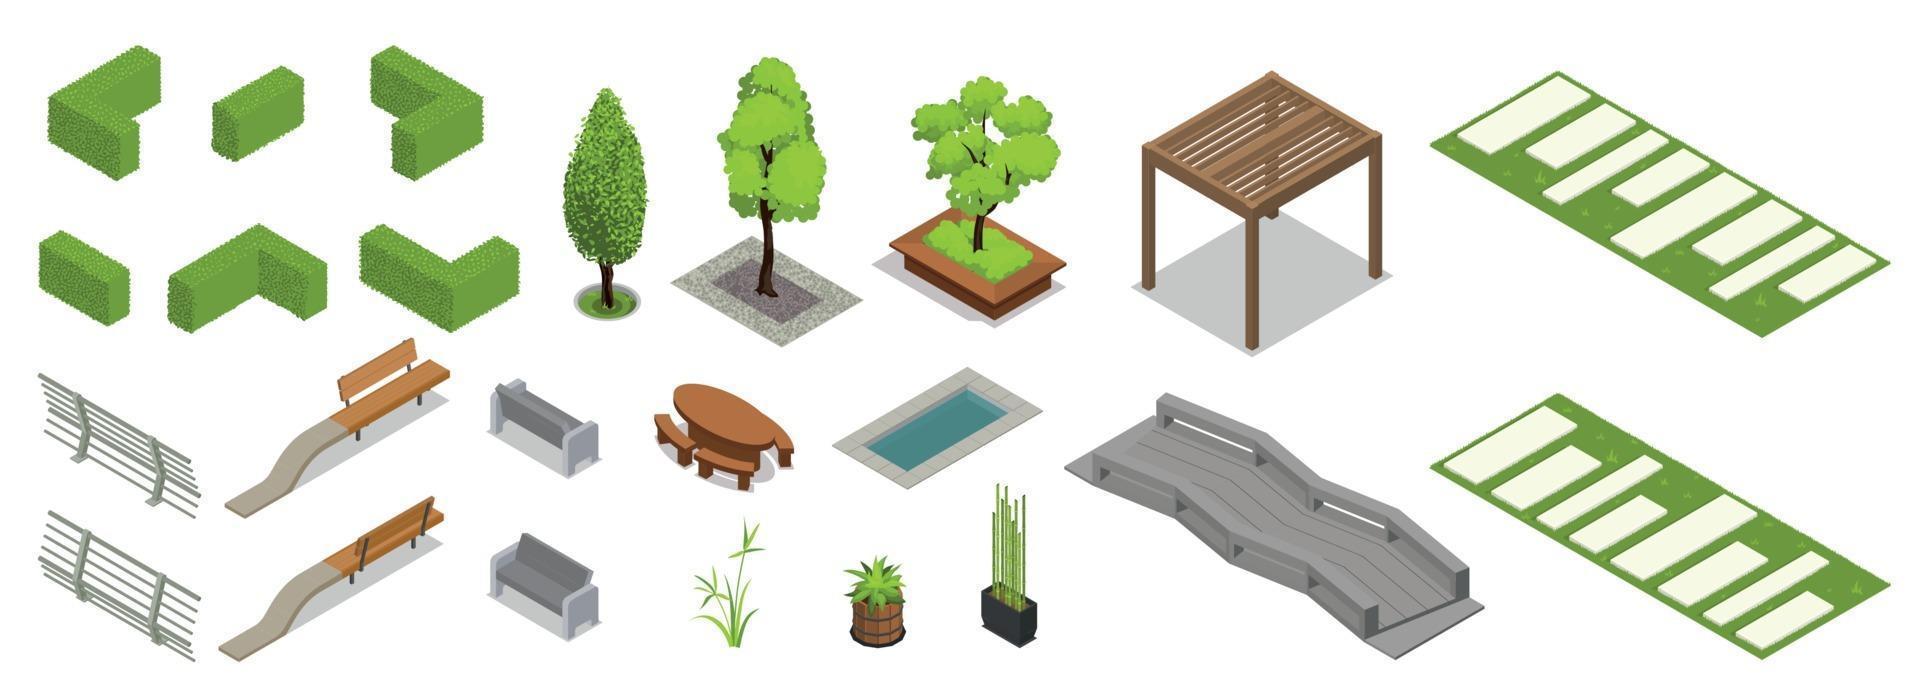 Landscape Design Icons Collection vector